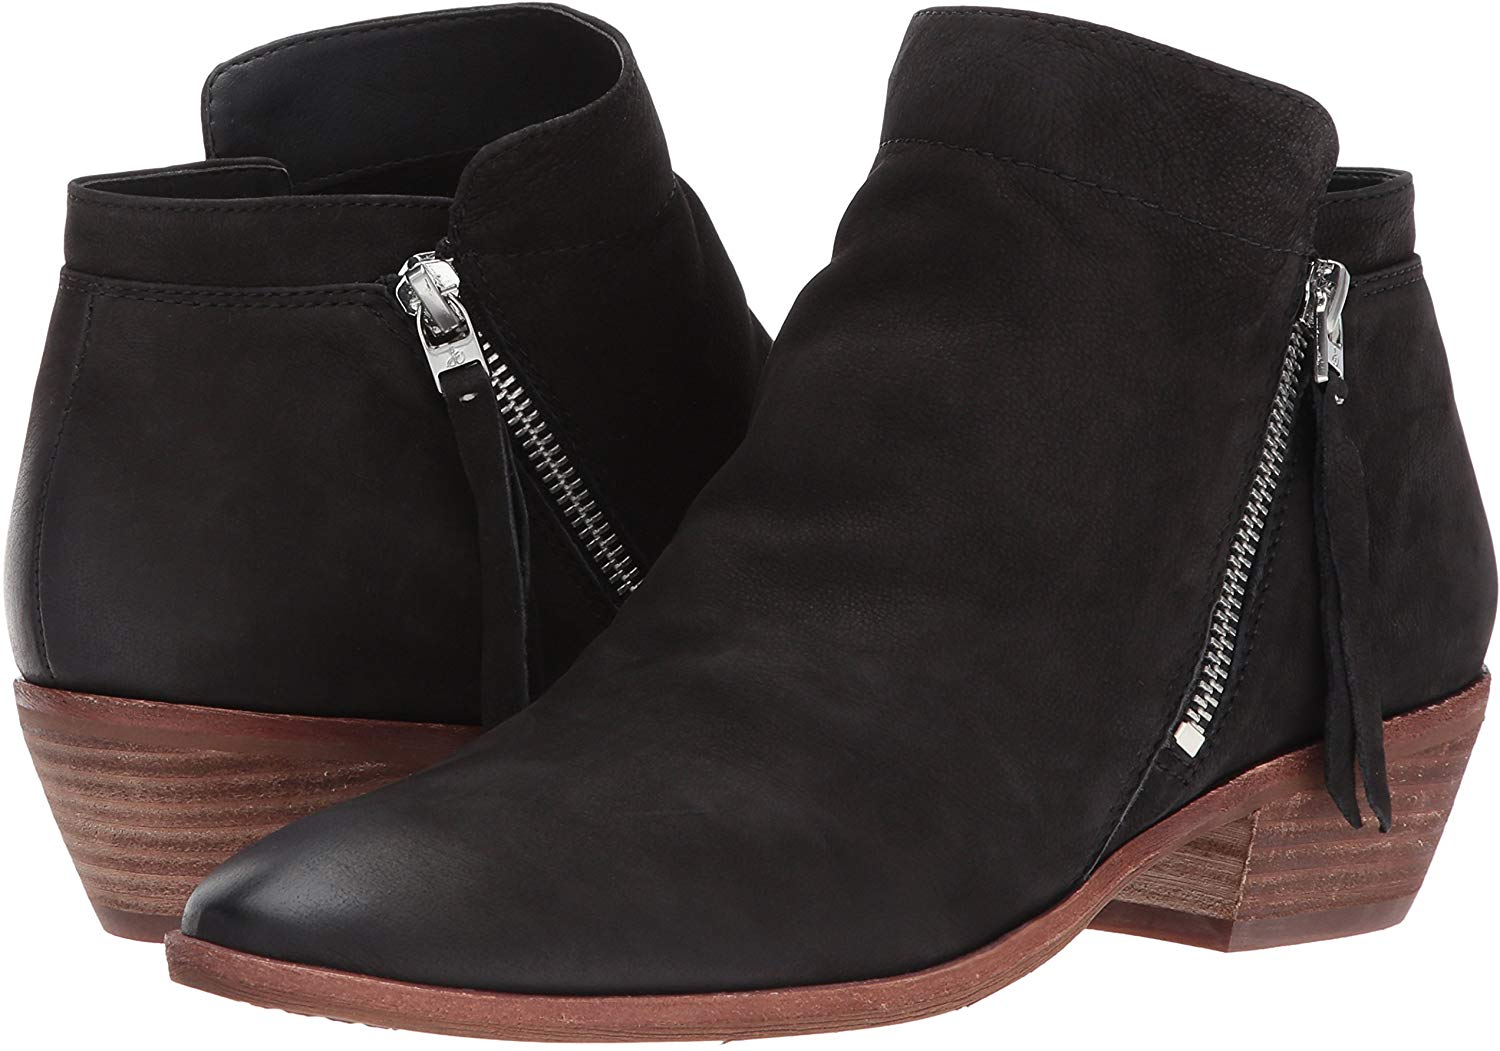 Sam Edelman Women's Packer Ankle Boot, Black Leather, Size 8.5 yeZd | eBay